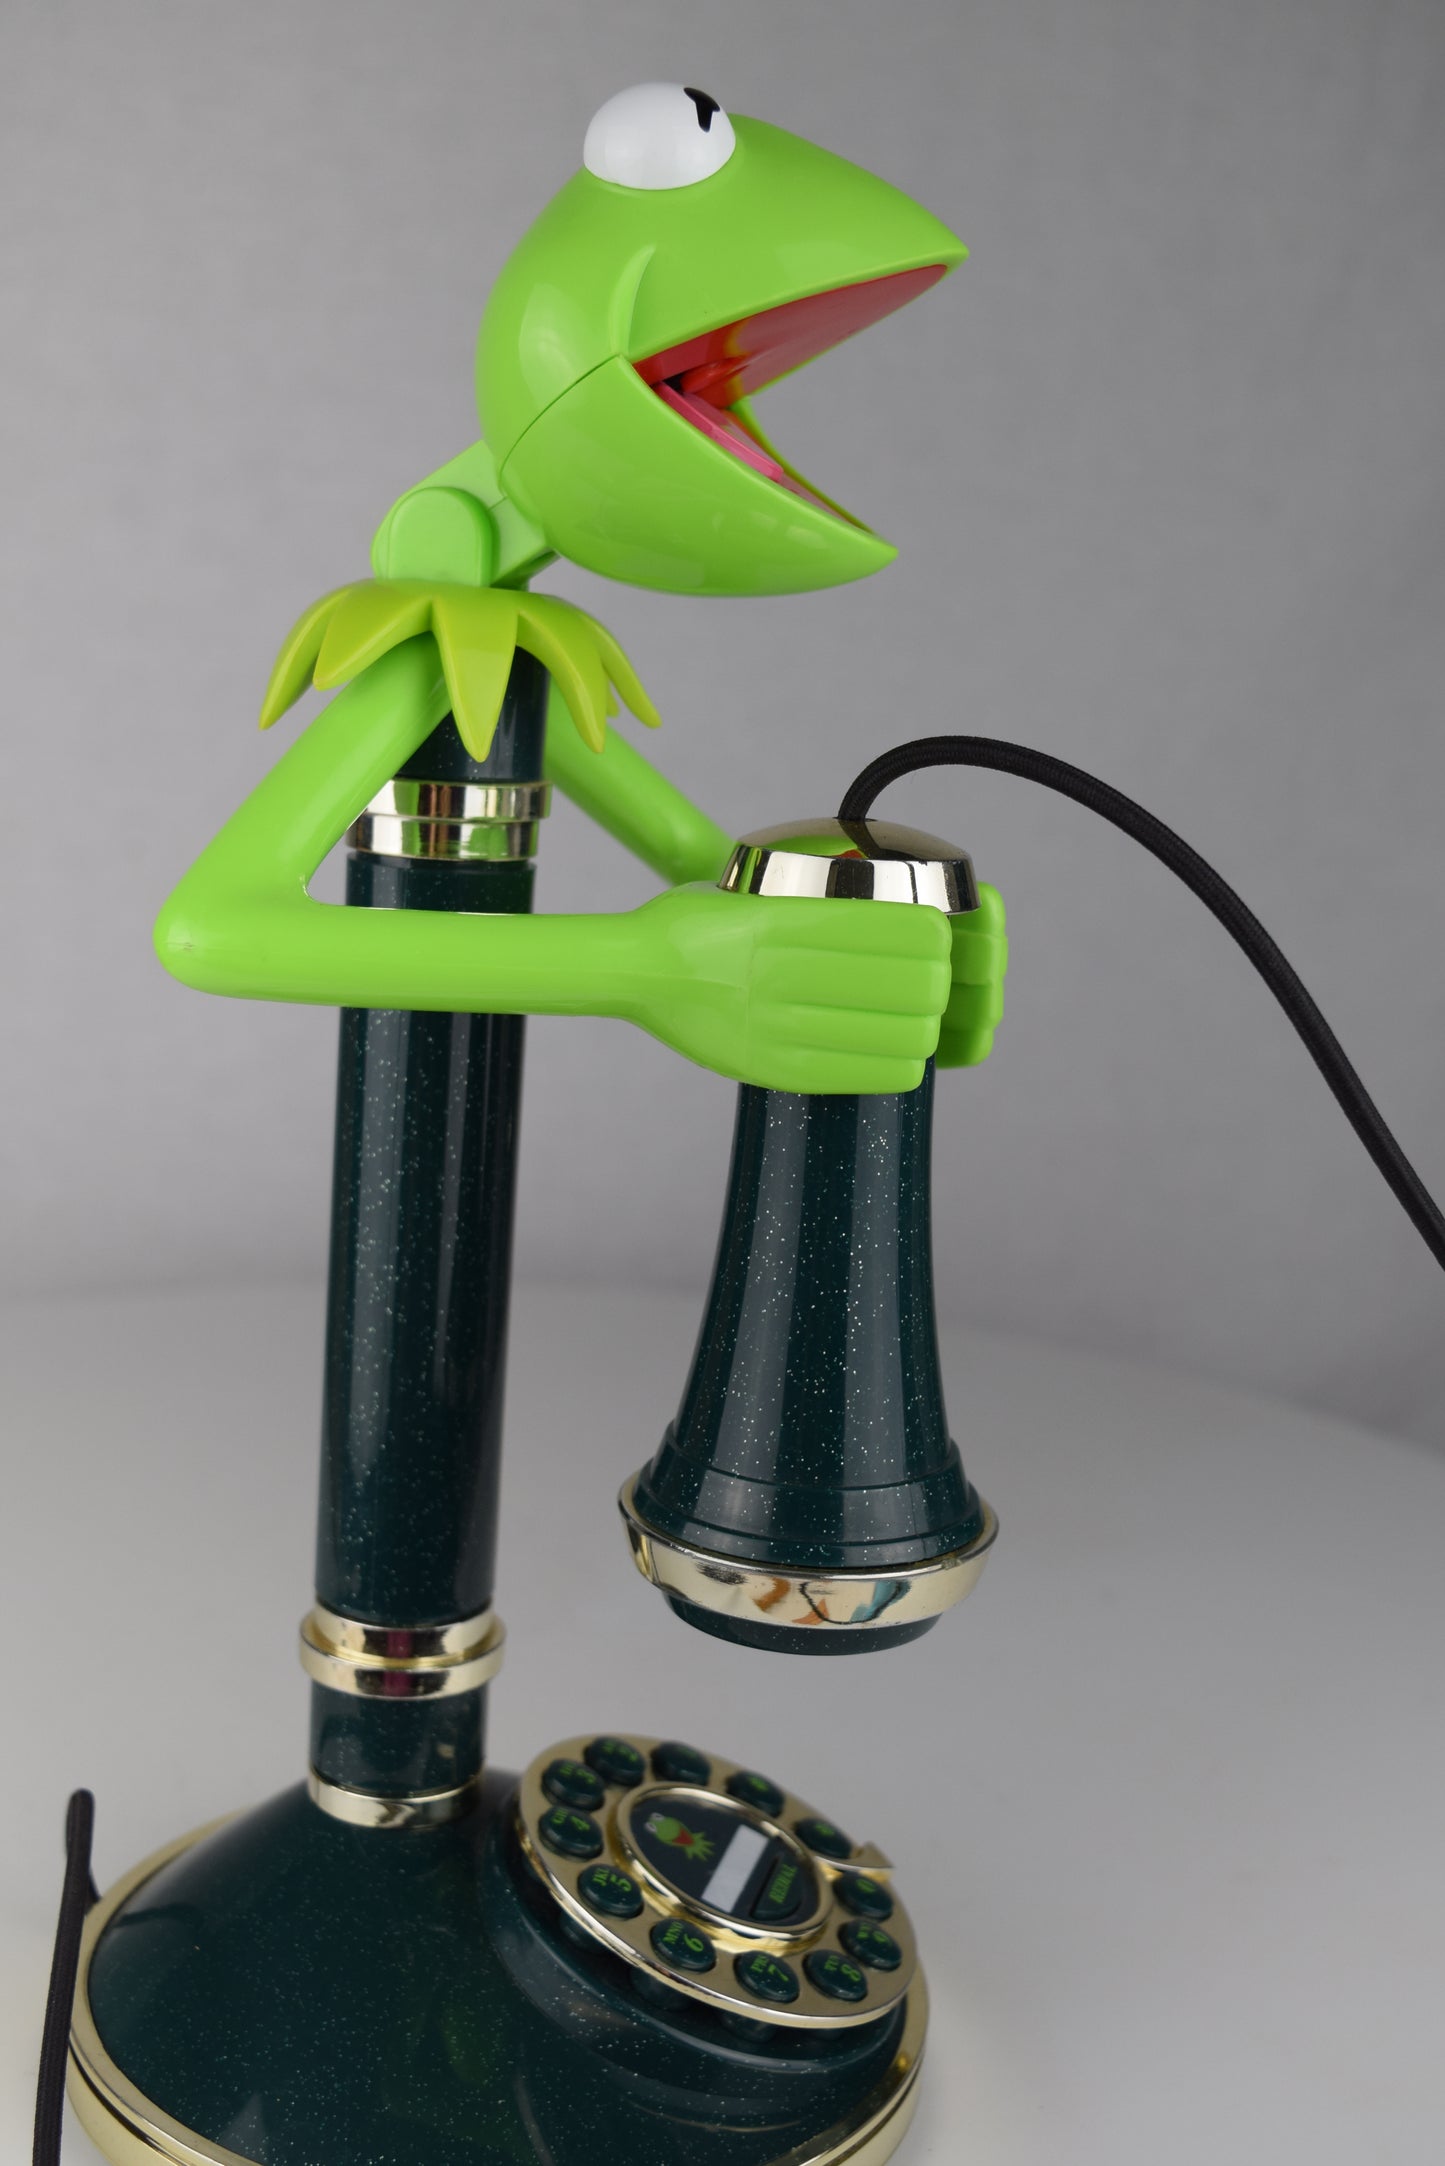 Kermit the Frog Candlestick Novelty Phone